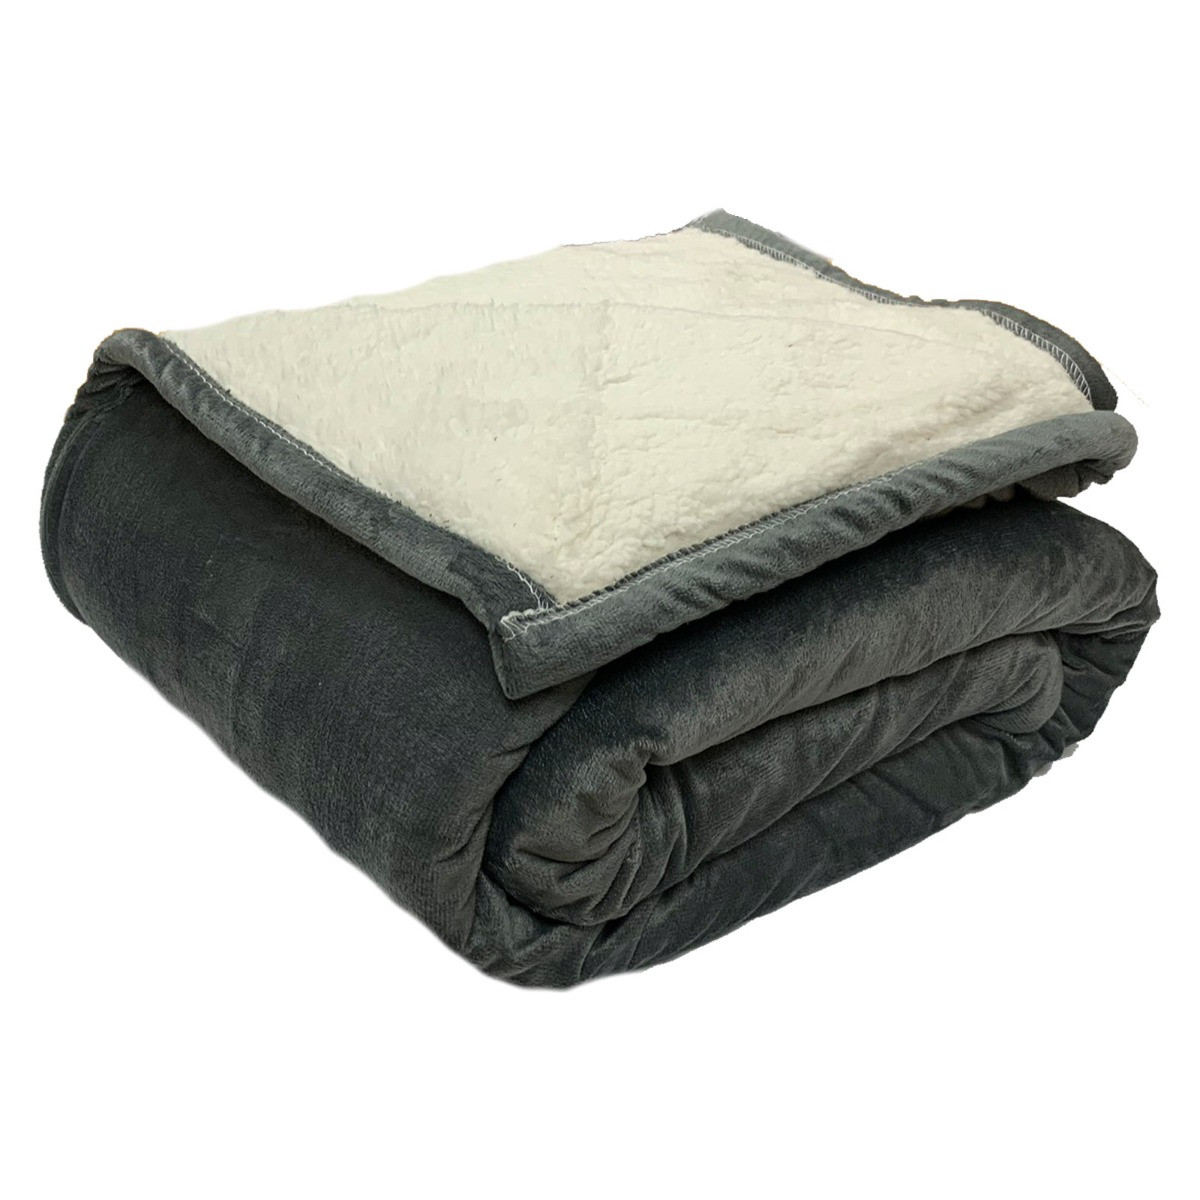 Dreamscene Plain Sherpa Fleece Throw, Grey - 150 x 180cm>